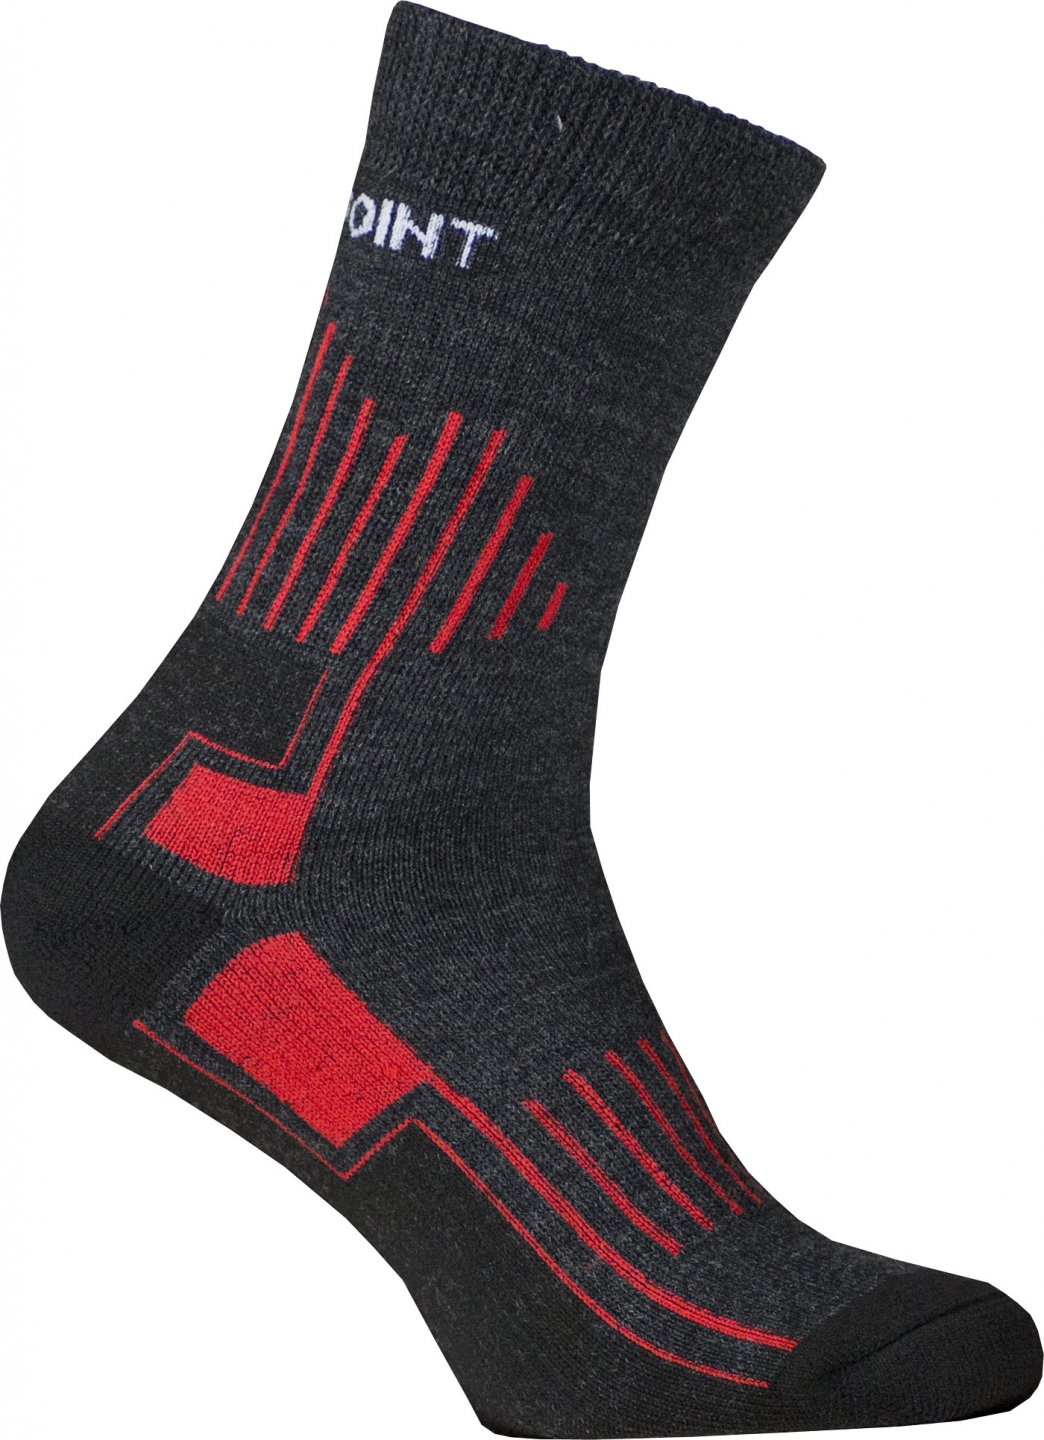 Ponožky High Point Mountain 2.0 Merino Velikost: 35 - 38